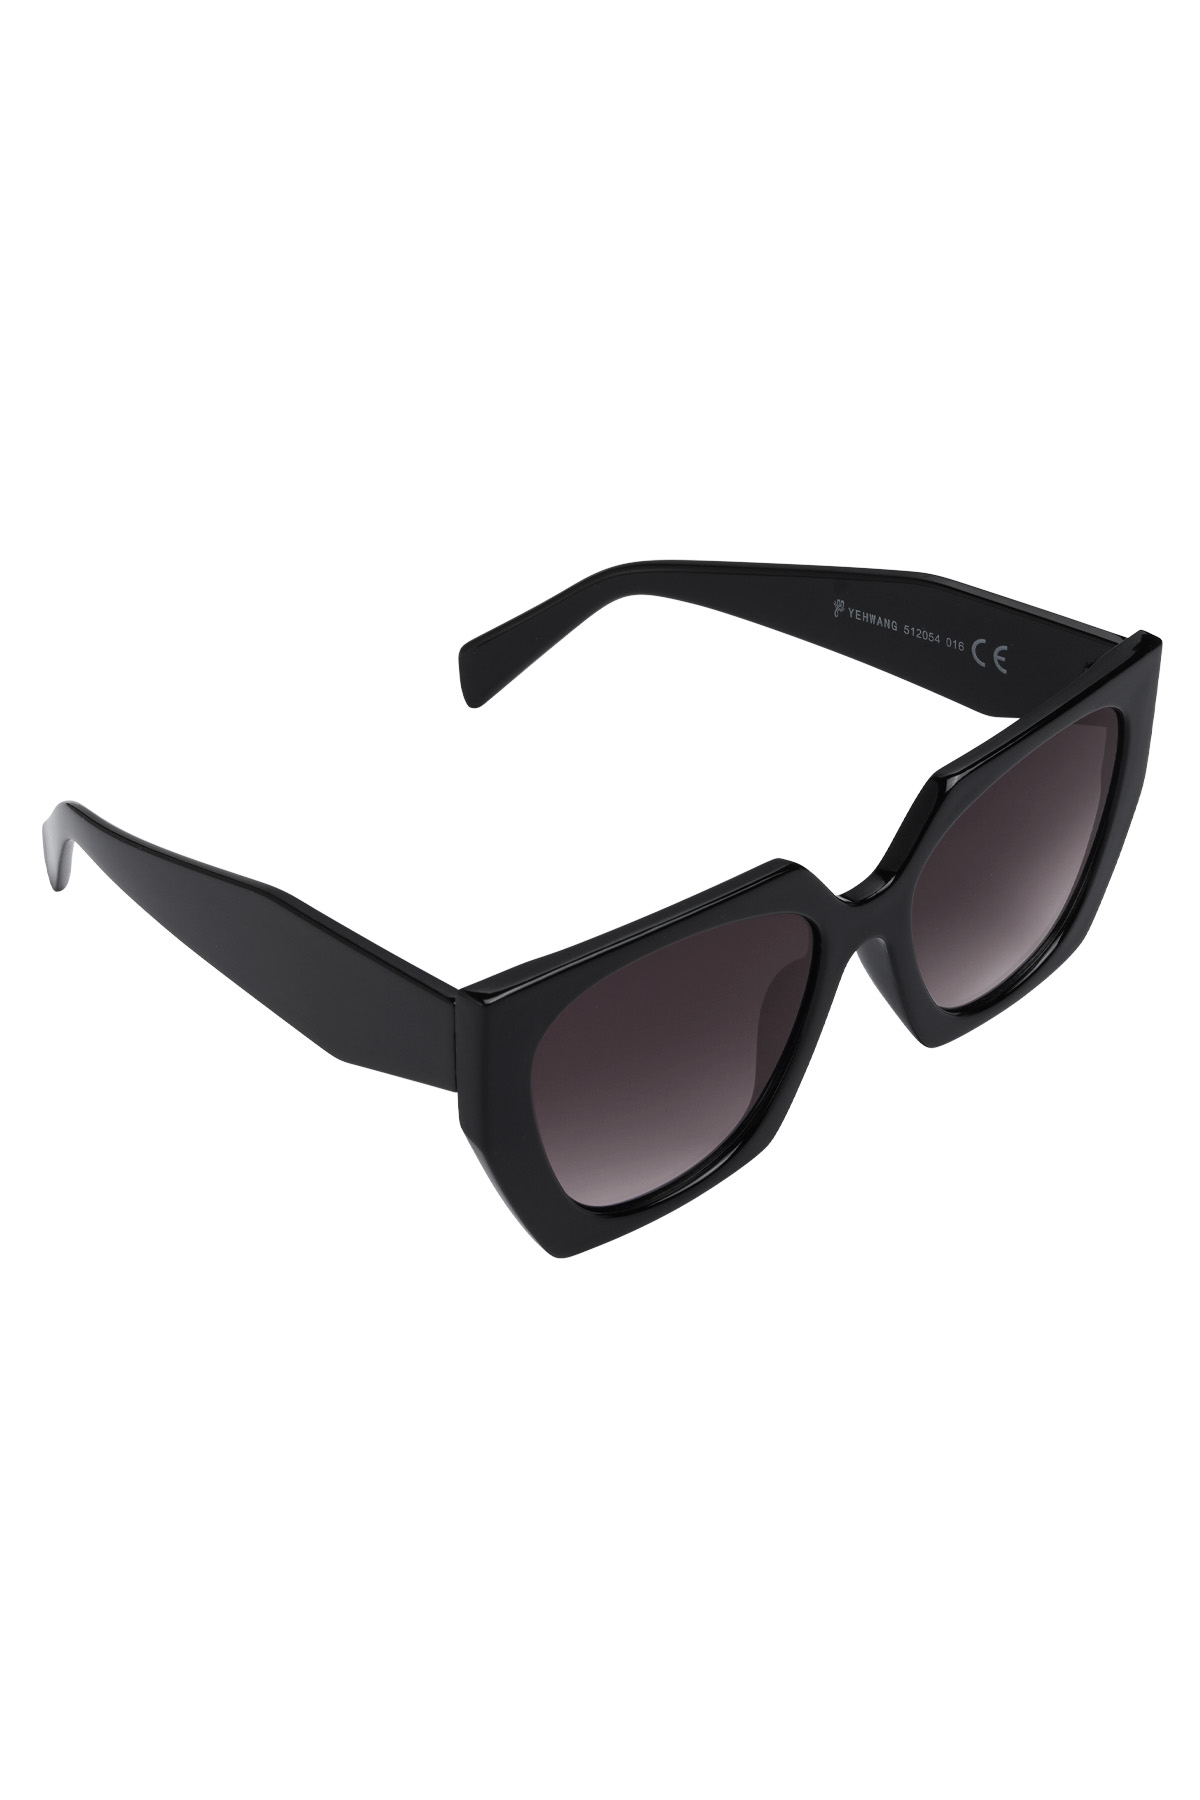 Trendy angular sunglasses - black h5 Picture5